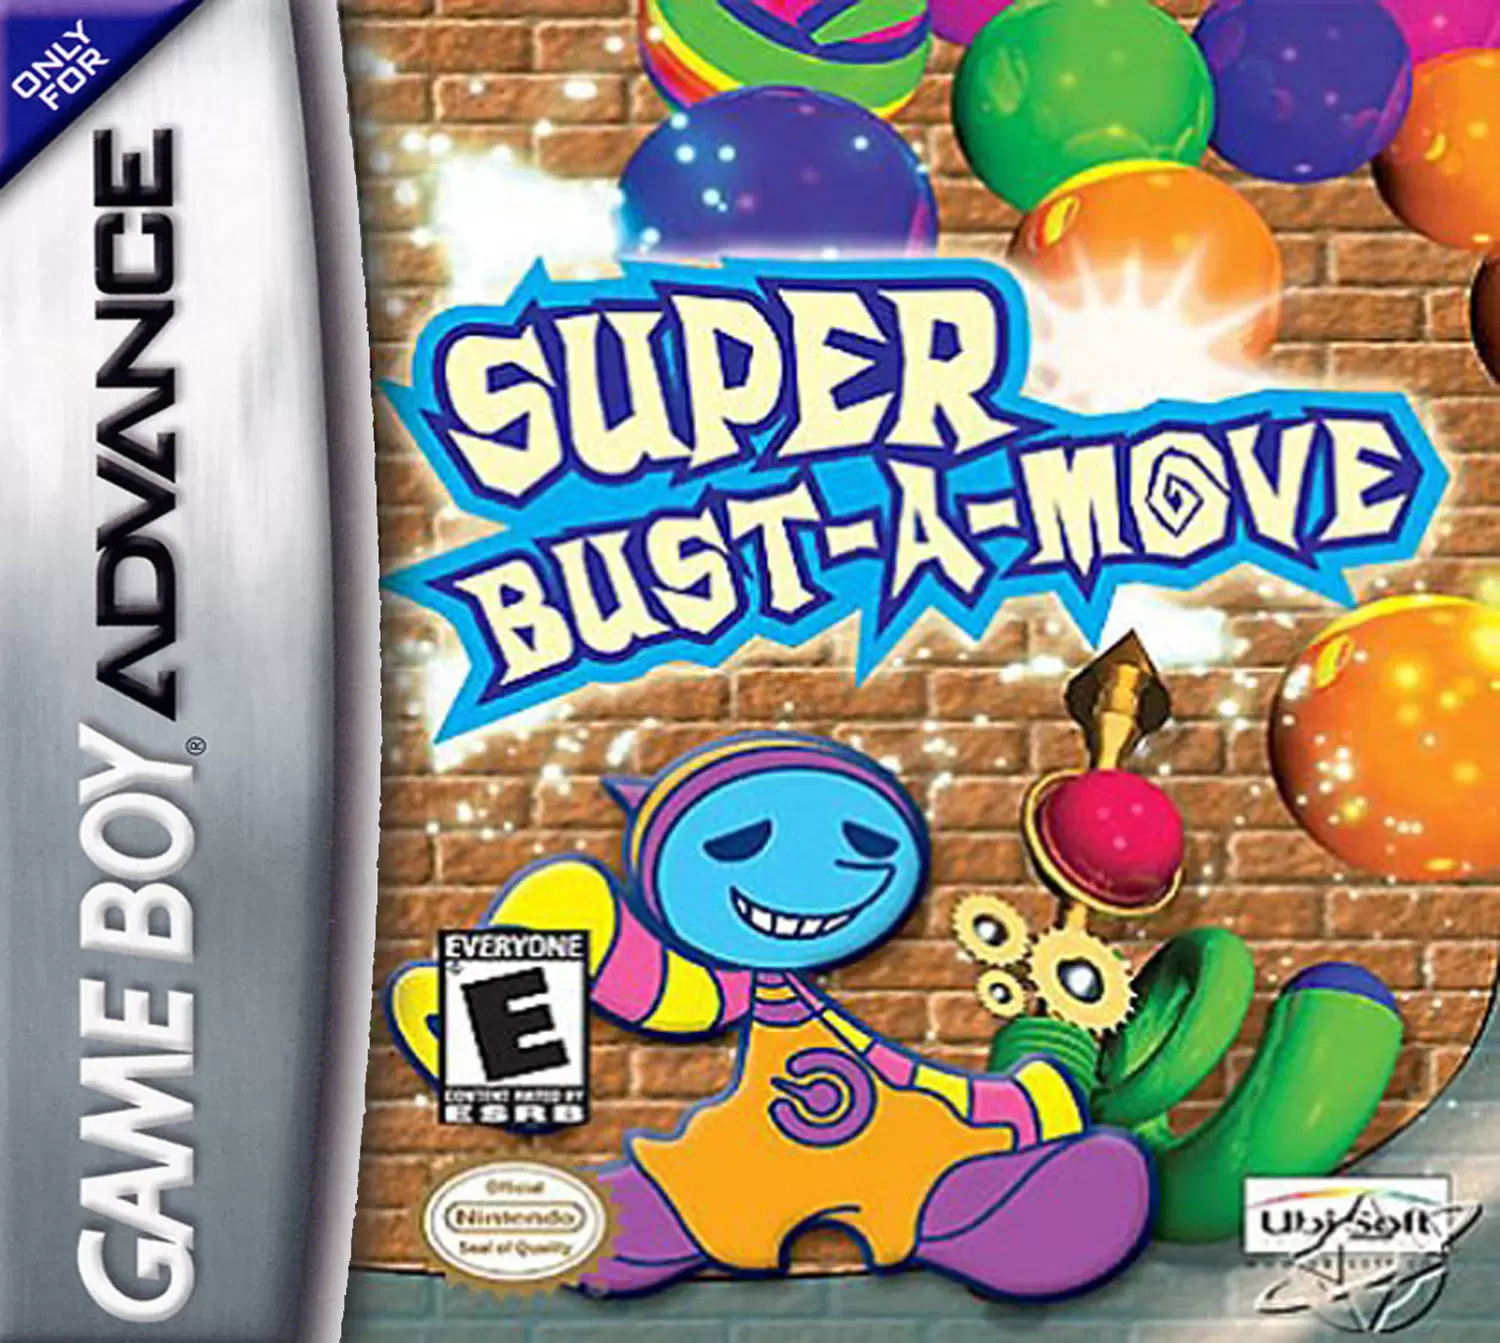 Game Boy Advance Games - Super Bust-A-Move